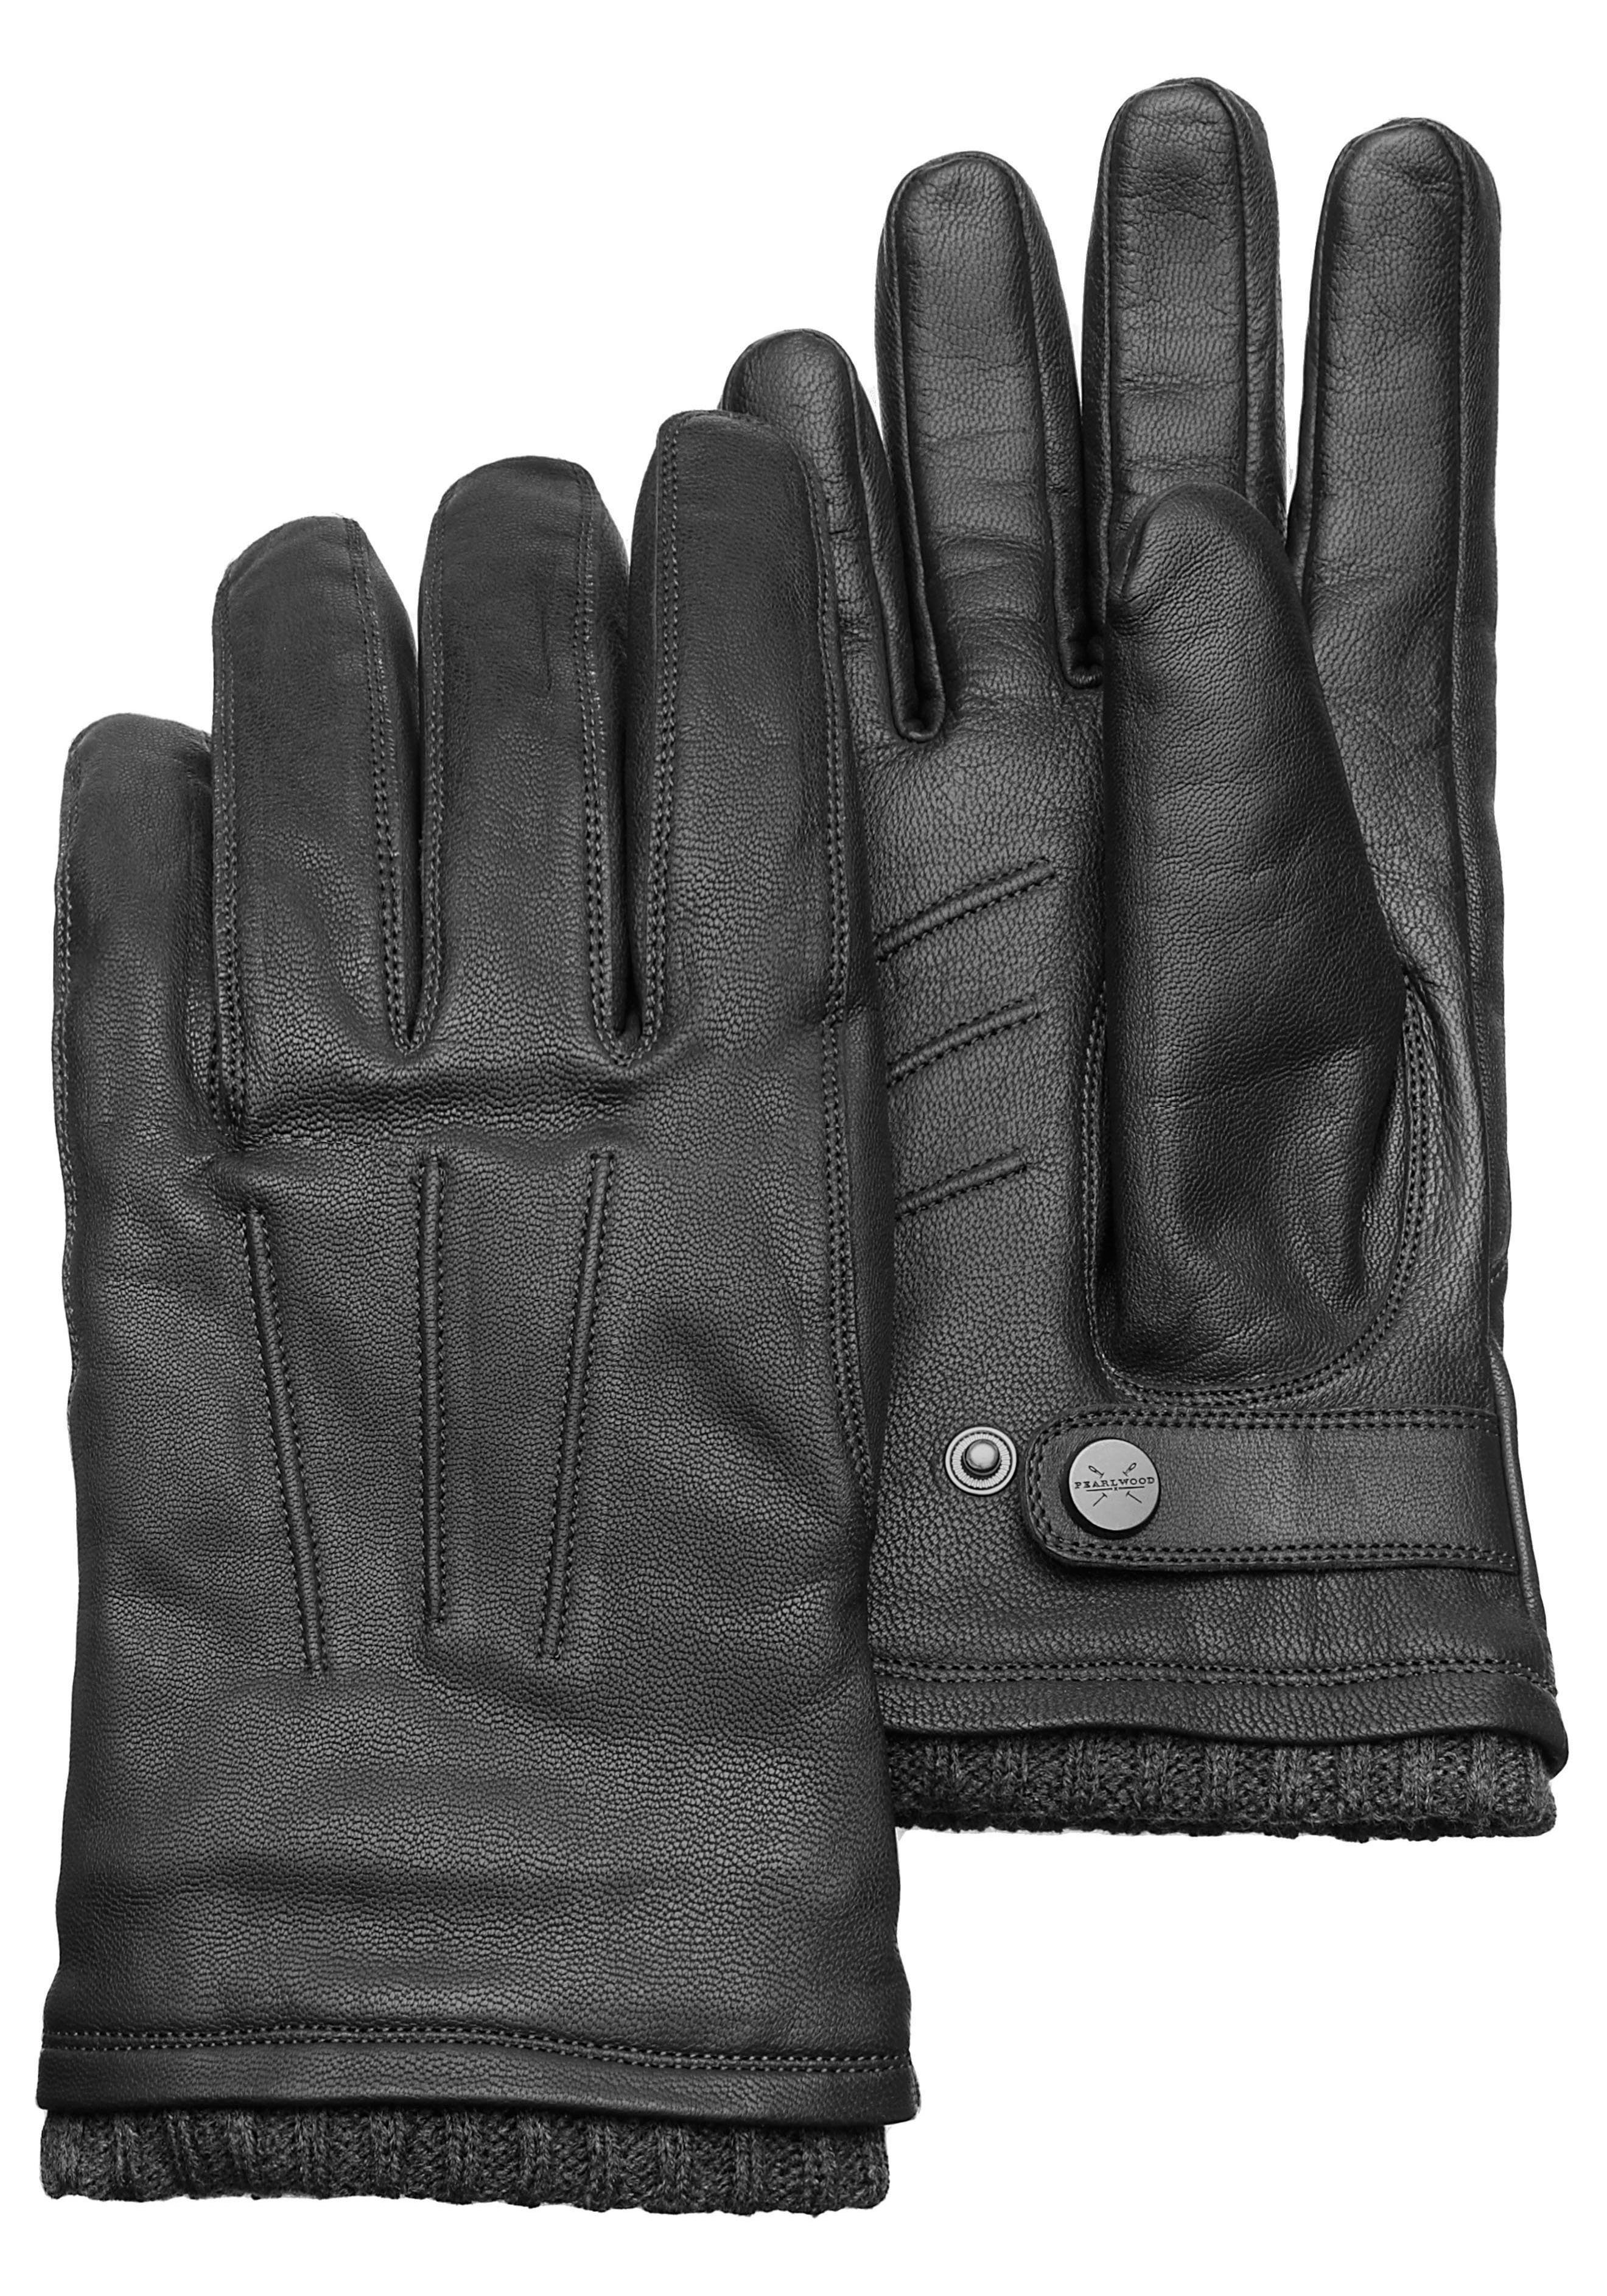 PEARLWOOD Lederhandschuhe Newton leichte Vintage Optik durch Waxfinish black | Handschuhe